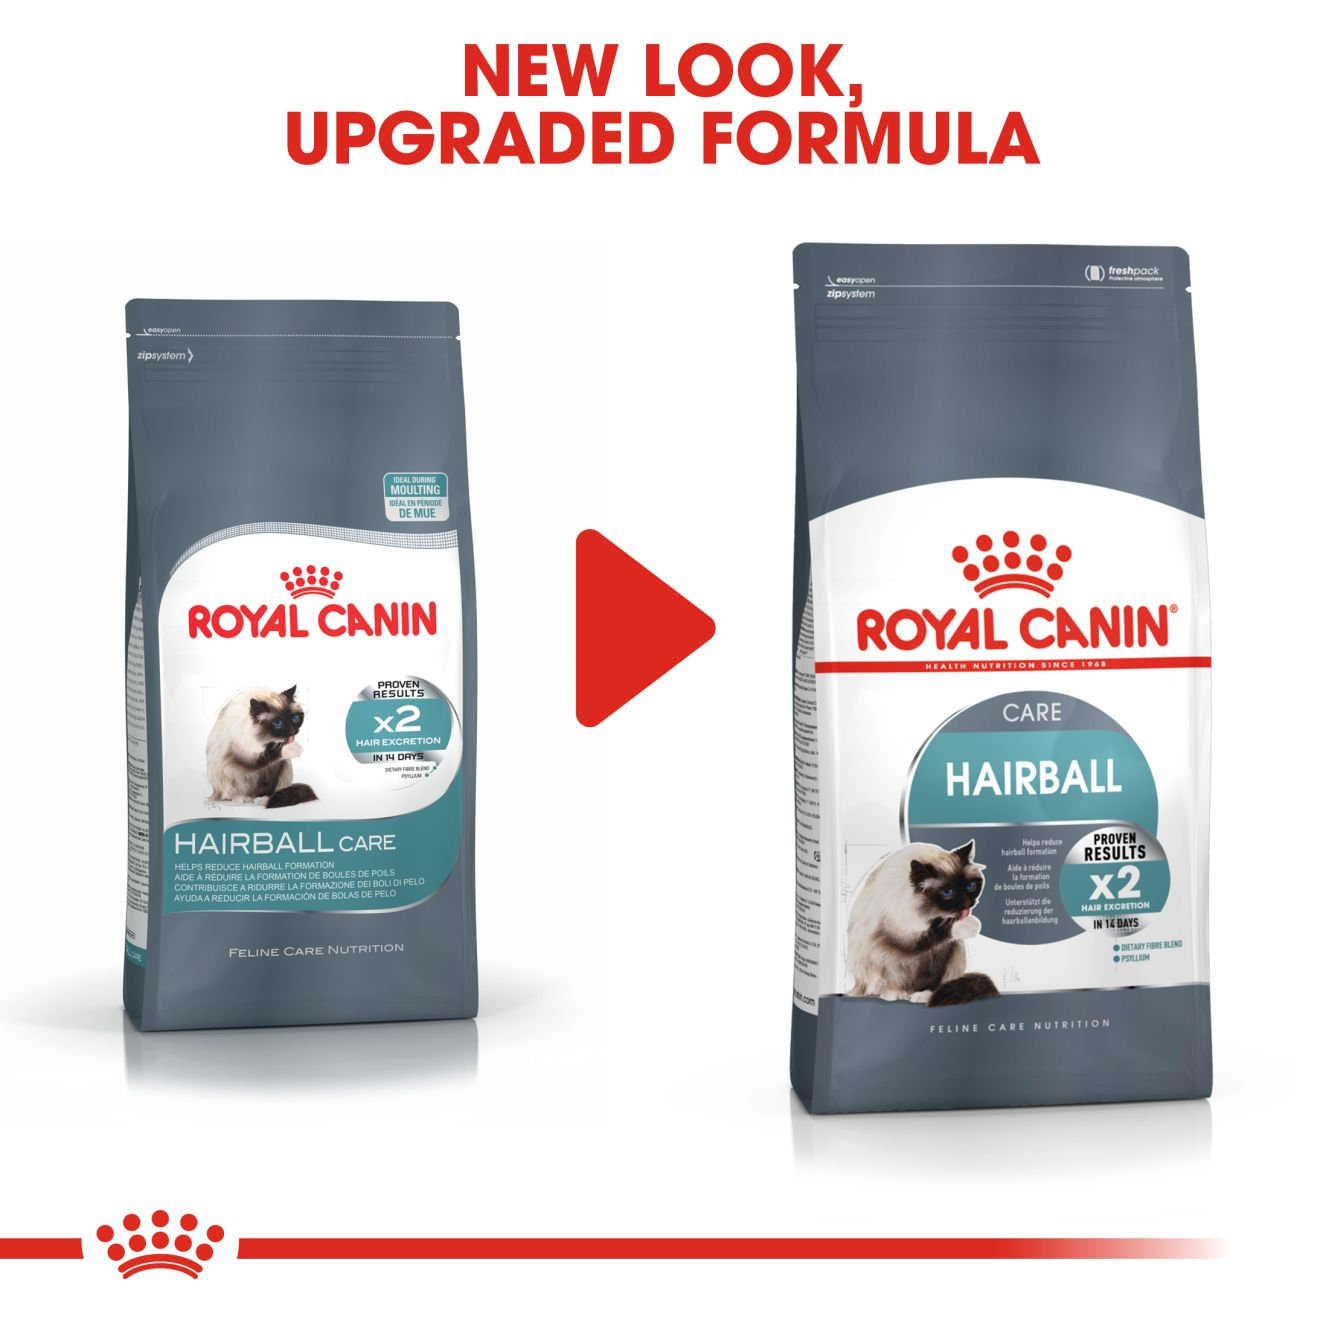 Hairball Care dry | Royal Canin